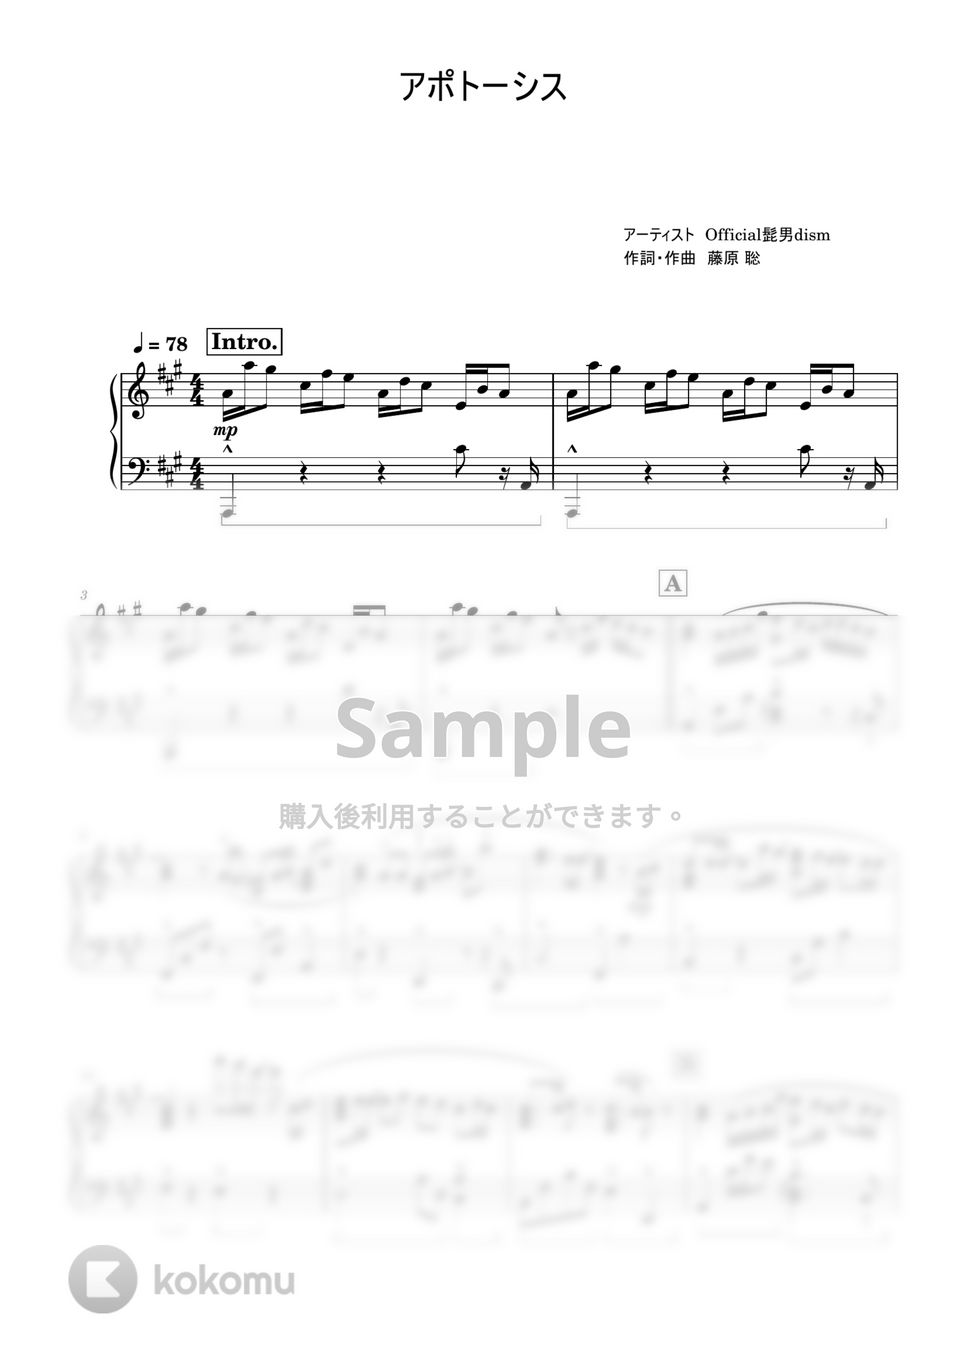 Official髭男dism - アポトーシス (中級レベル) by Saori8Piano